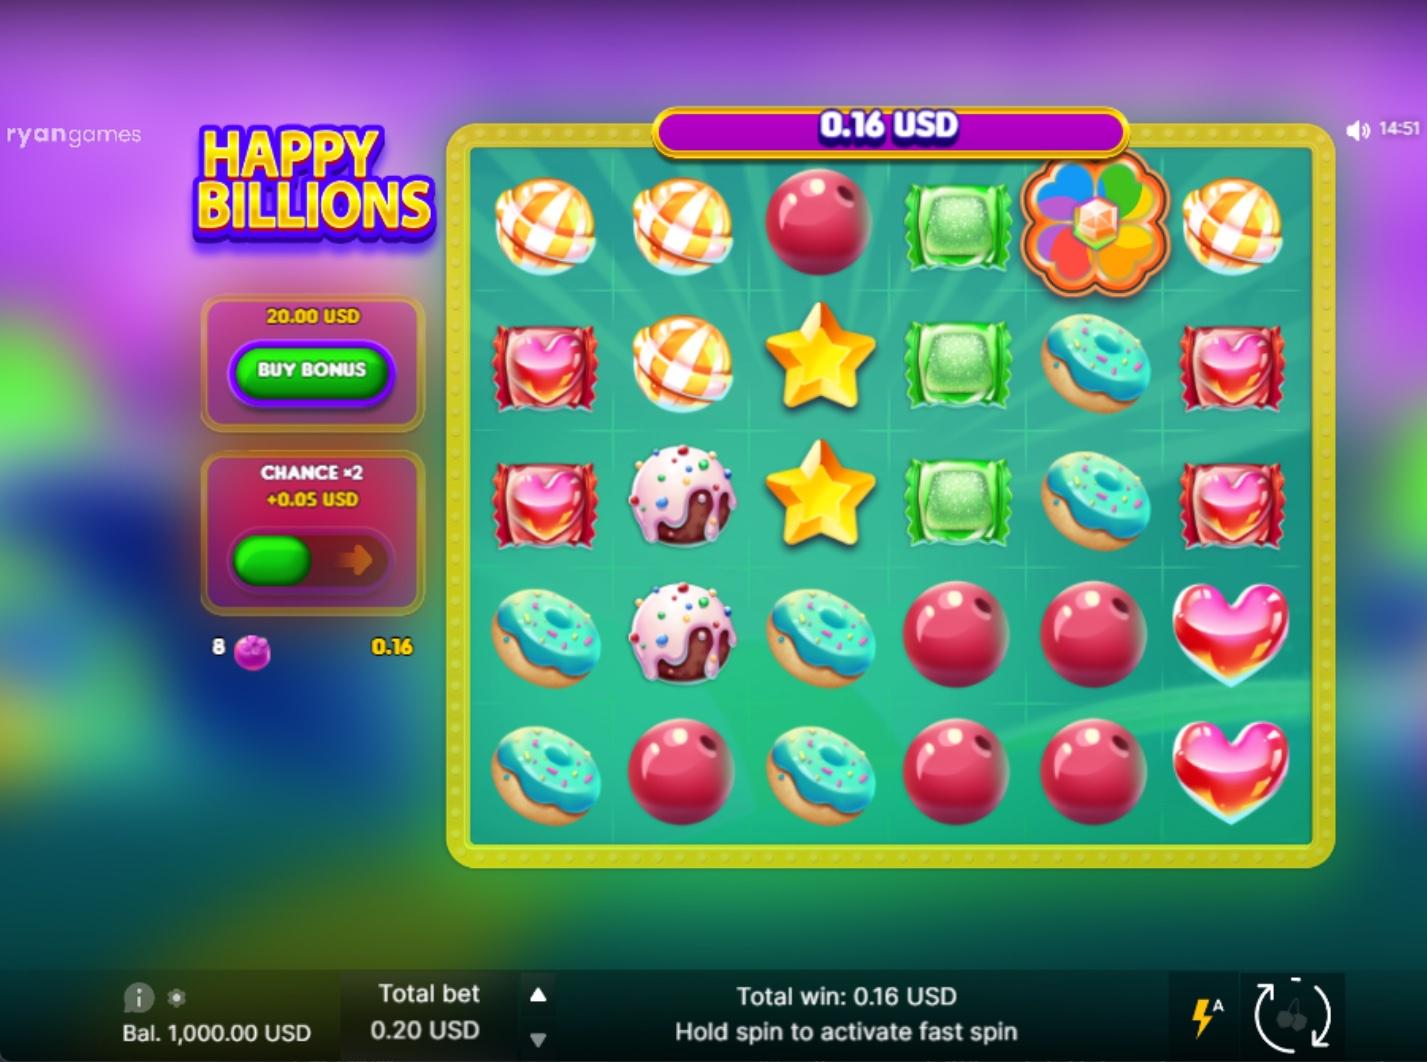 Slotmachine game: “Happy Billions”